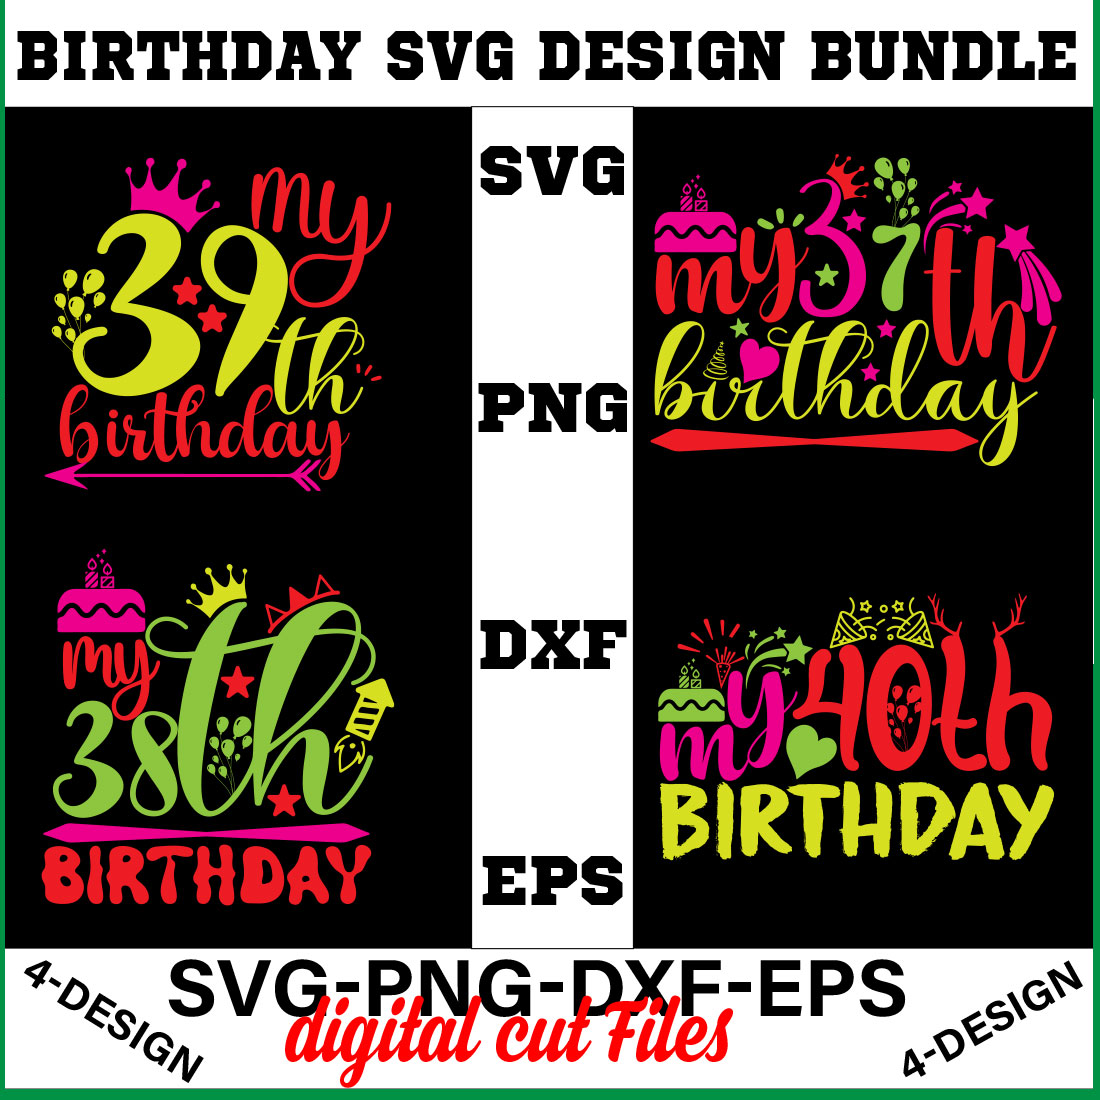 birthday svg design bundle Happy birthday svg bundle hand lettered birthday svg birthday party svg Volume-10 cover image.